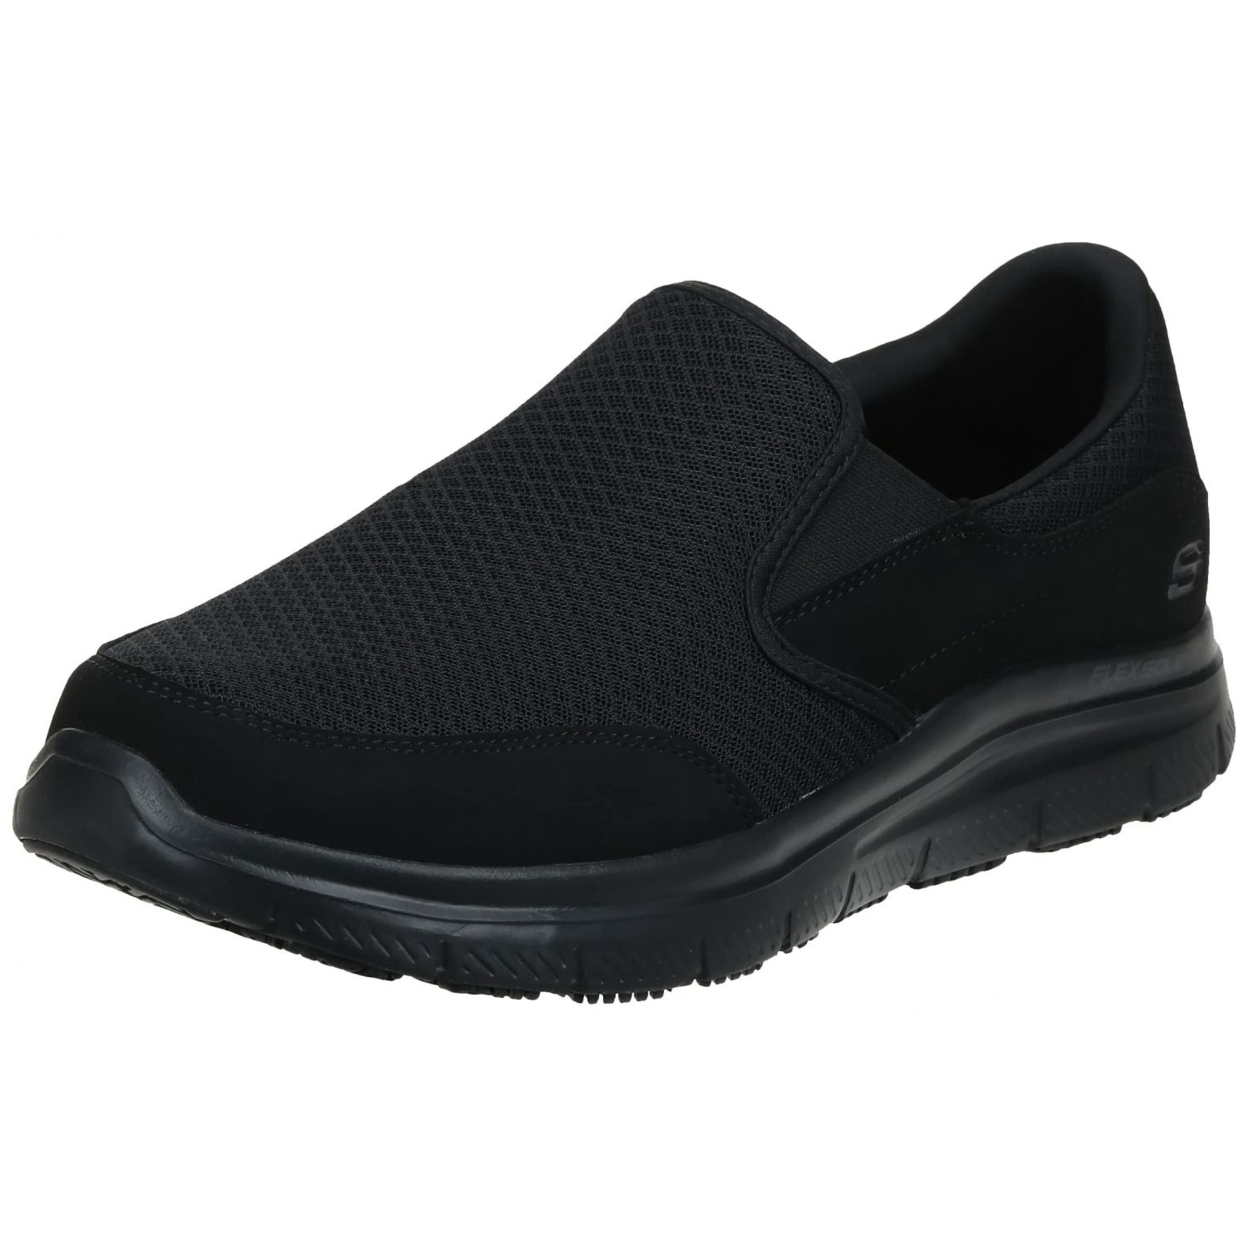 Skechers For Work Men's Flex Advantage Mcallen Food Service Shoe ONE SIZE BLACK - BLACK, 11.5 Wide